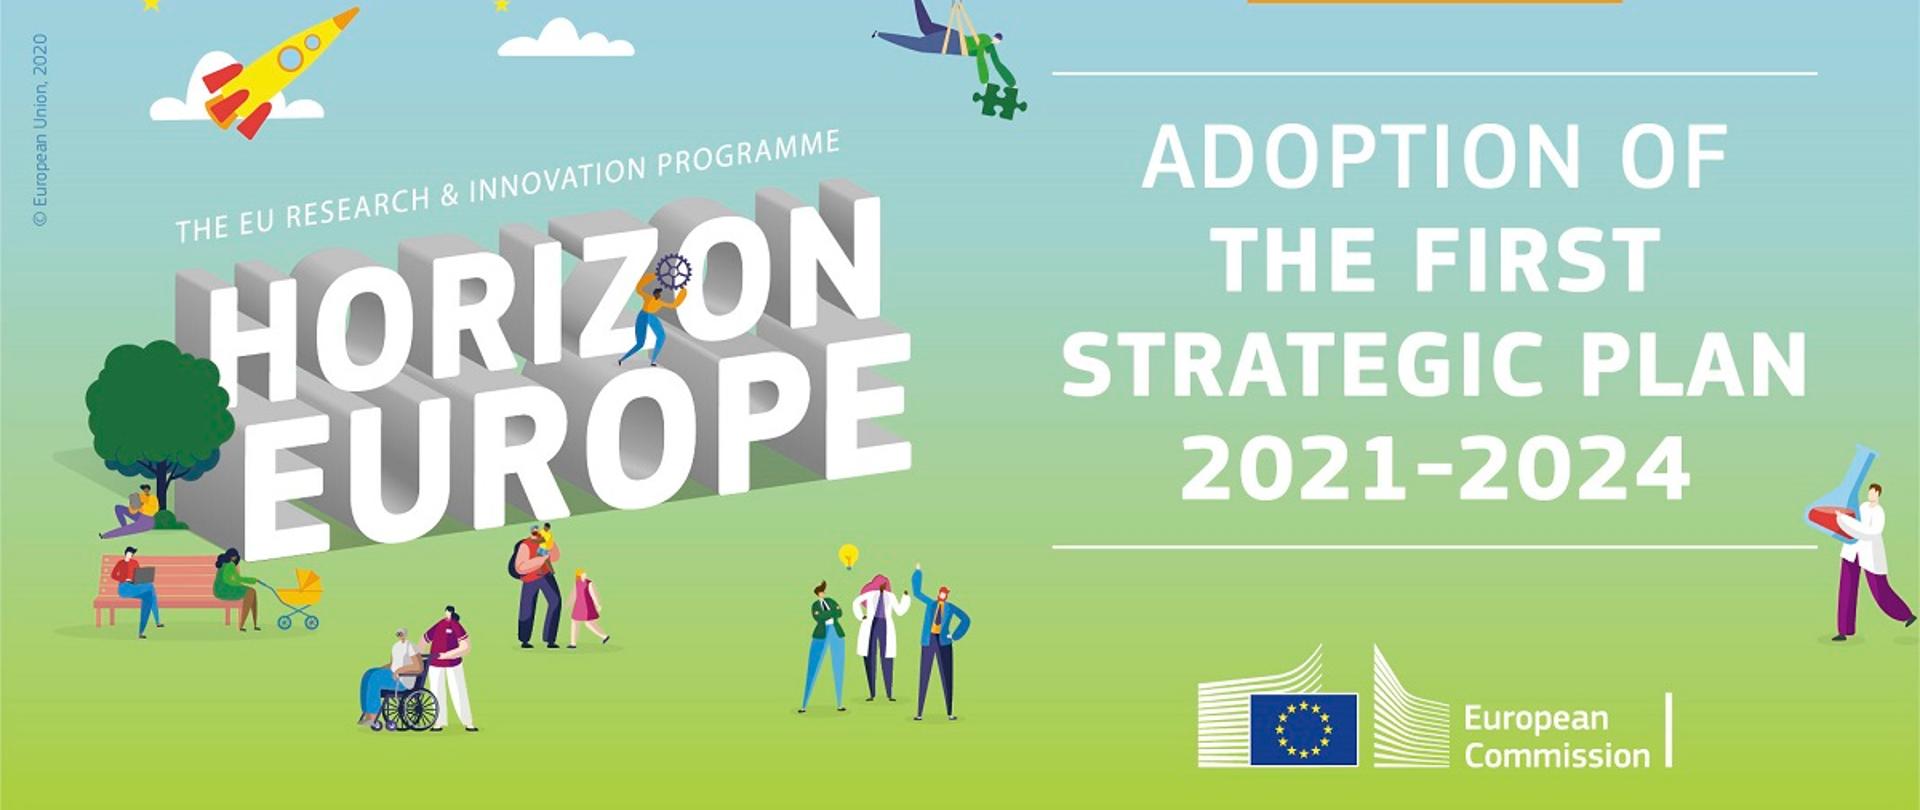 Horizon Europe Adoption of the first Strategic Plan 2021-2024